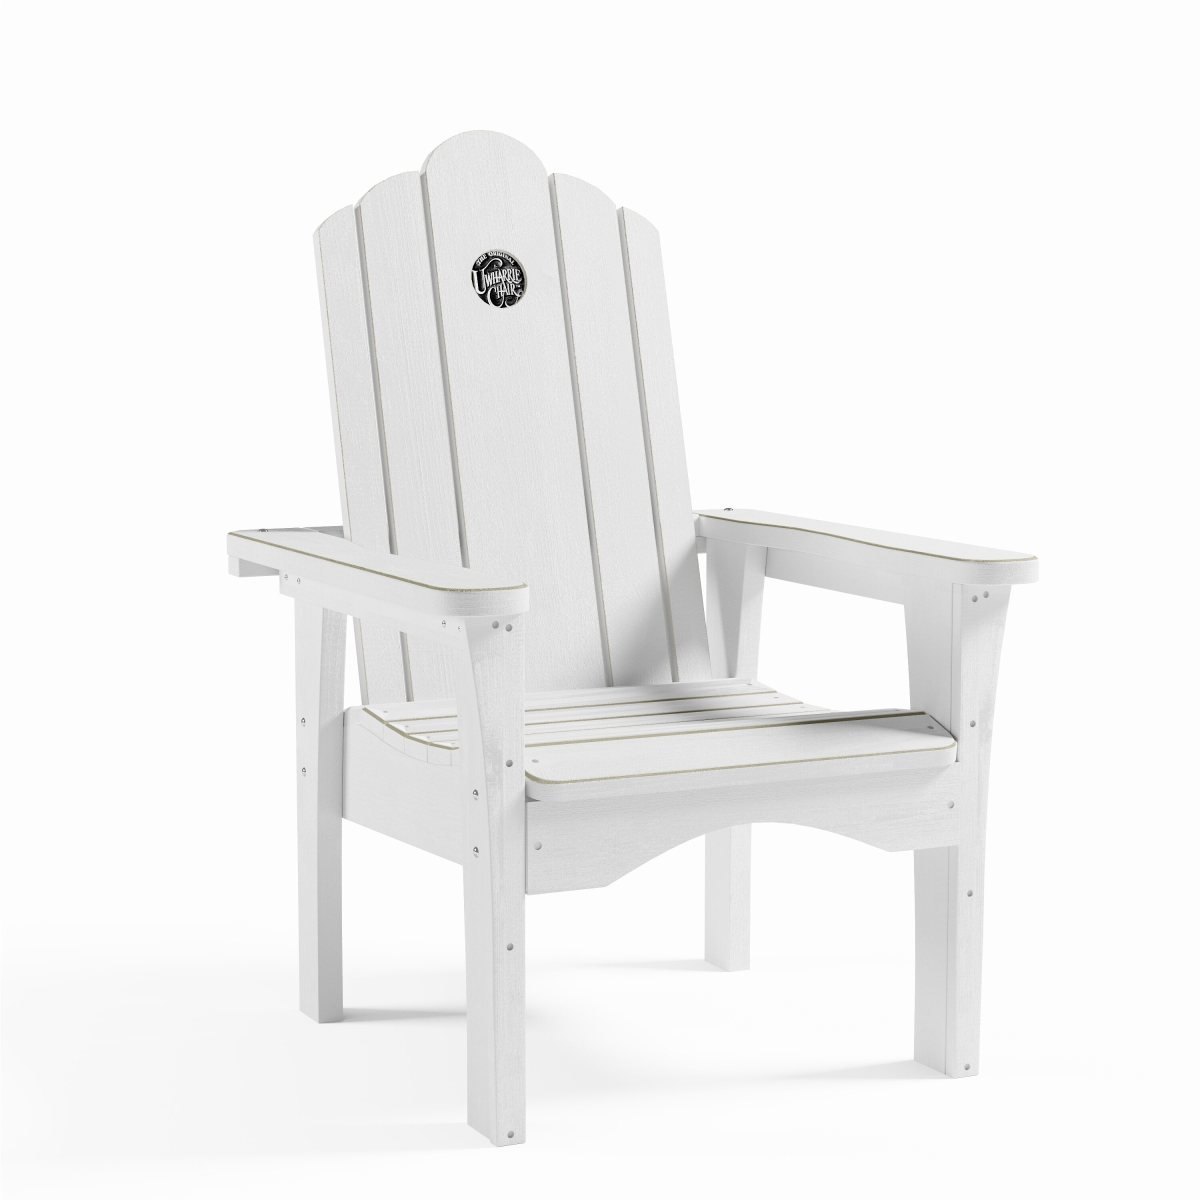 S114-013 Original Wood Lounge Chair, White Pine - 30.5 X 33.5 X 43.5 In.